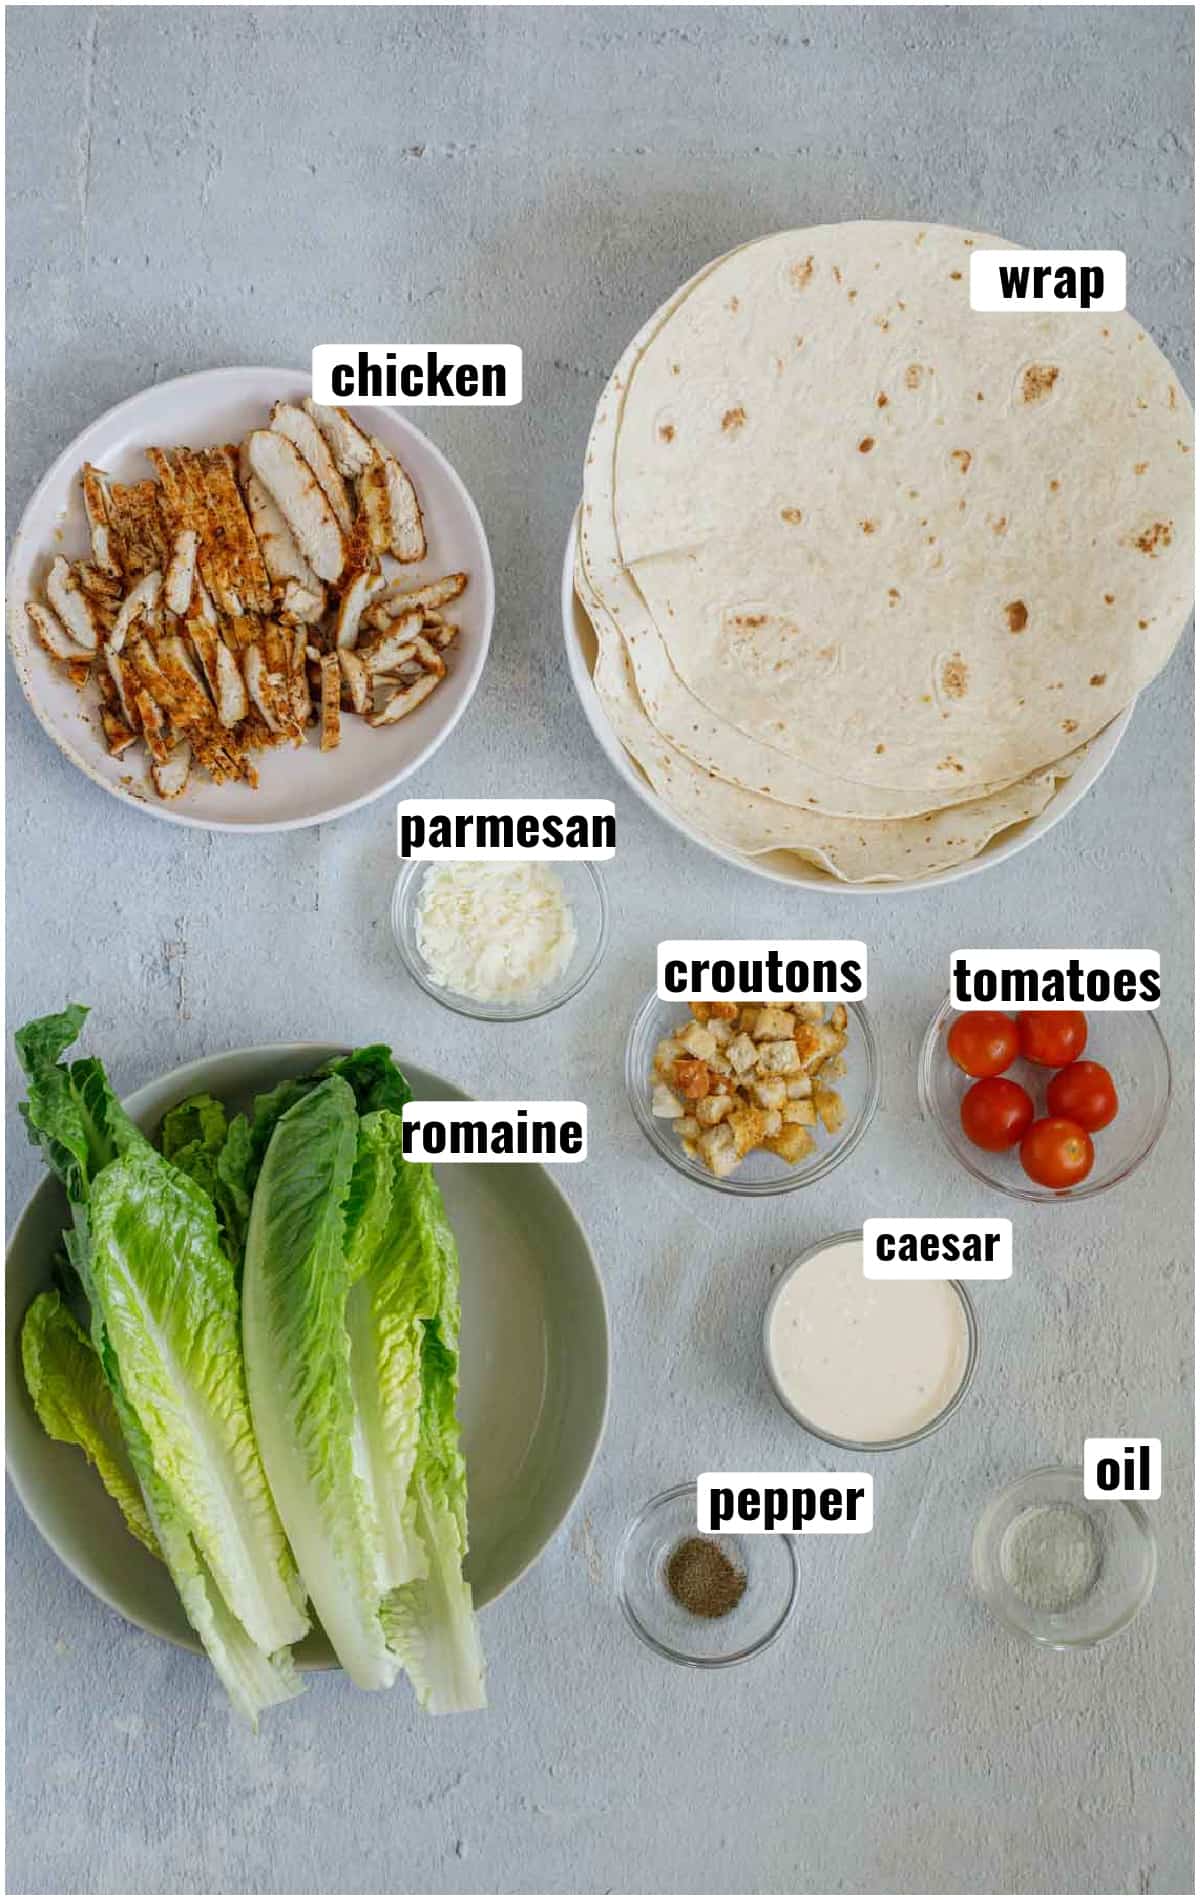 All ingredients for chicken caesar salad wrap.